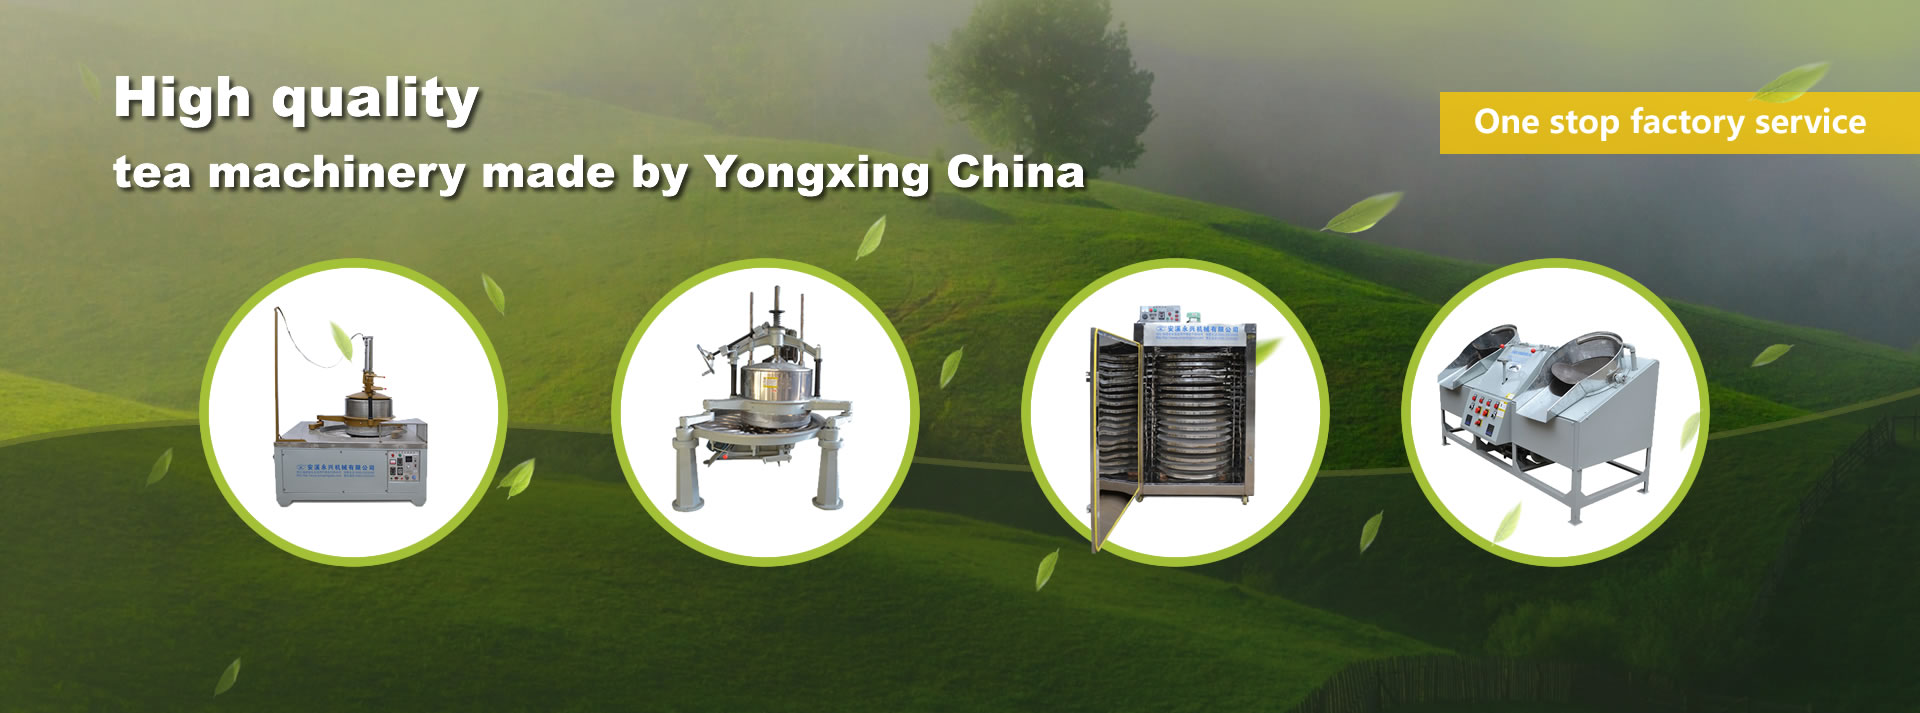 Tea making equipment from China Yongxing tea processing machinery.jpg